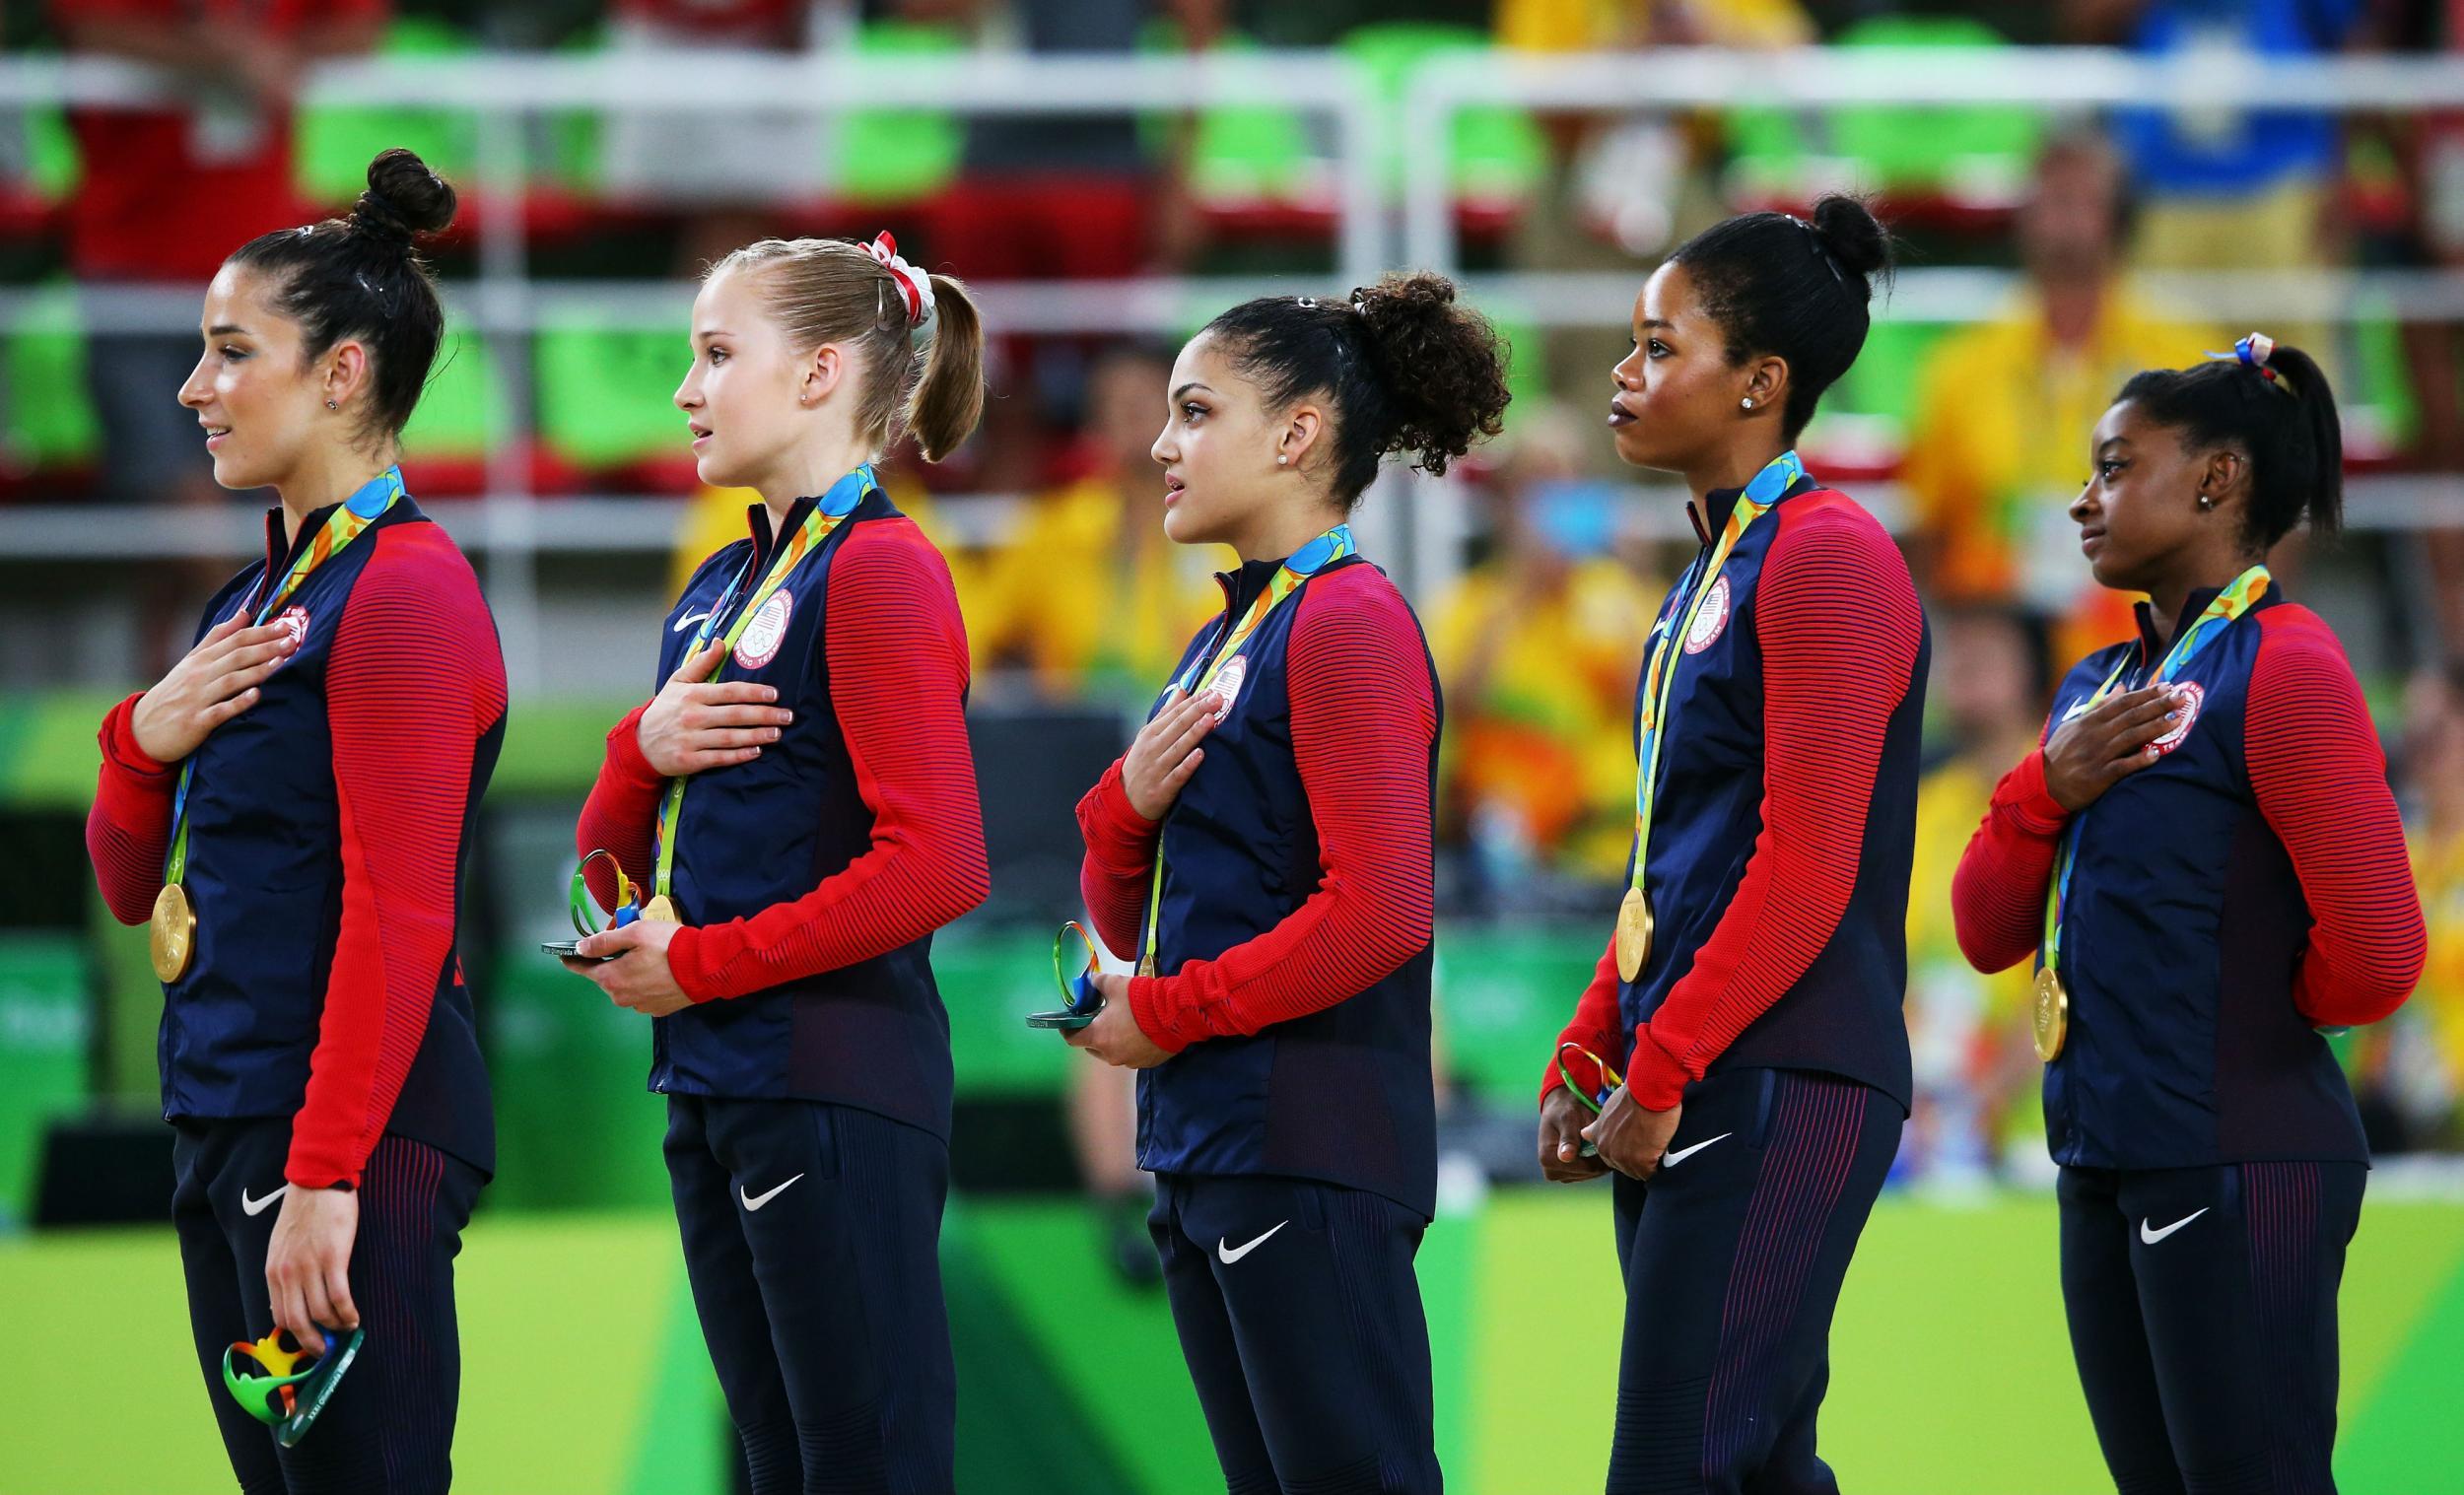 The USA gymnastics team after receiving their gold medals